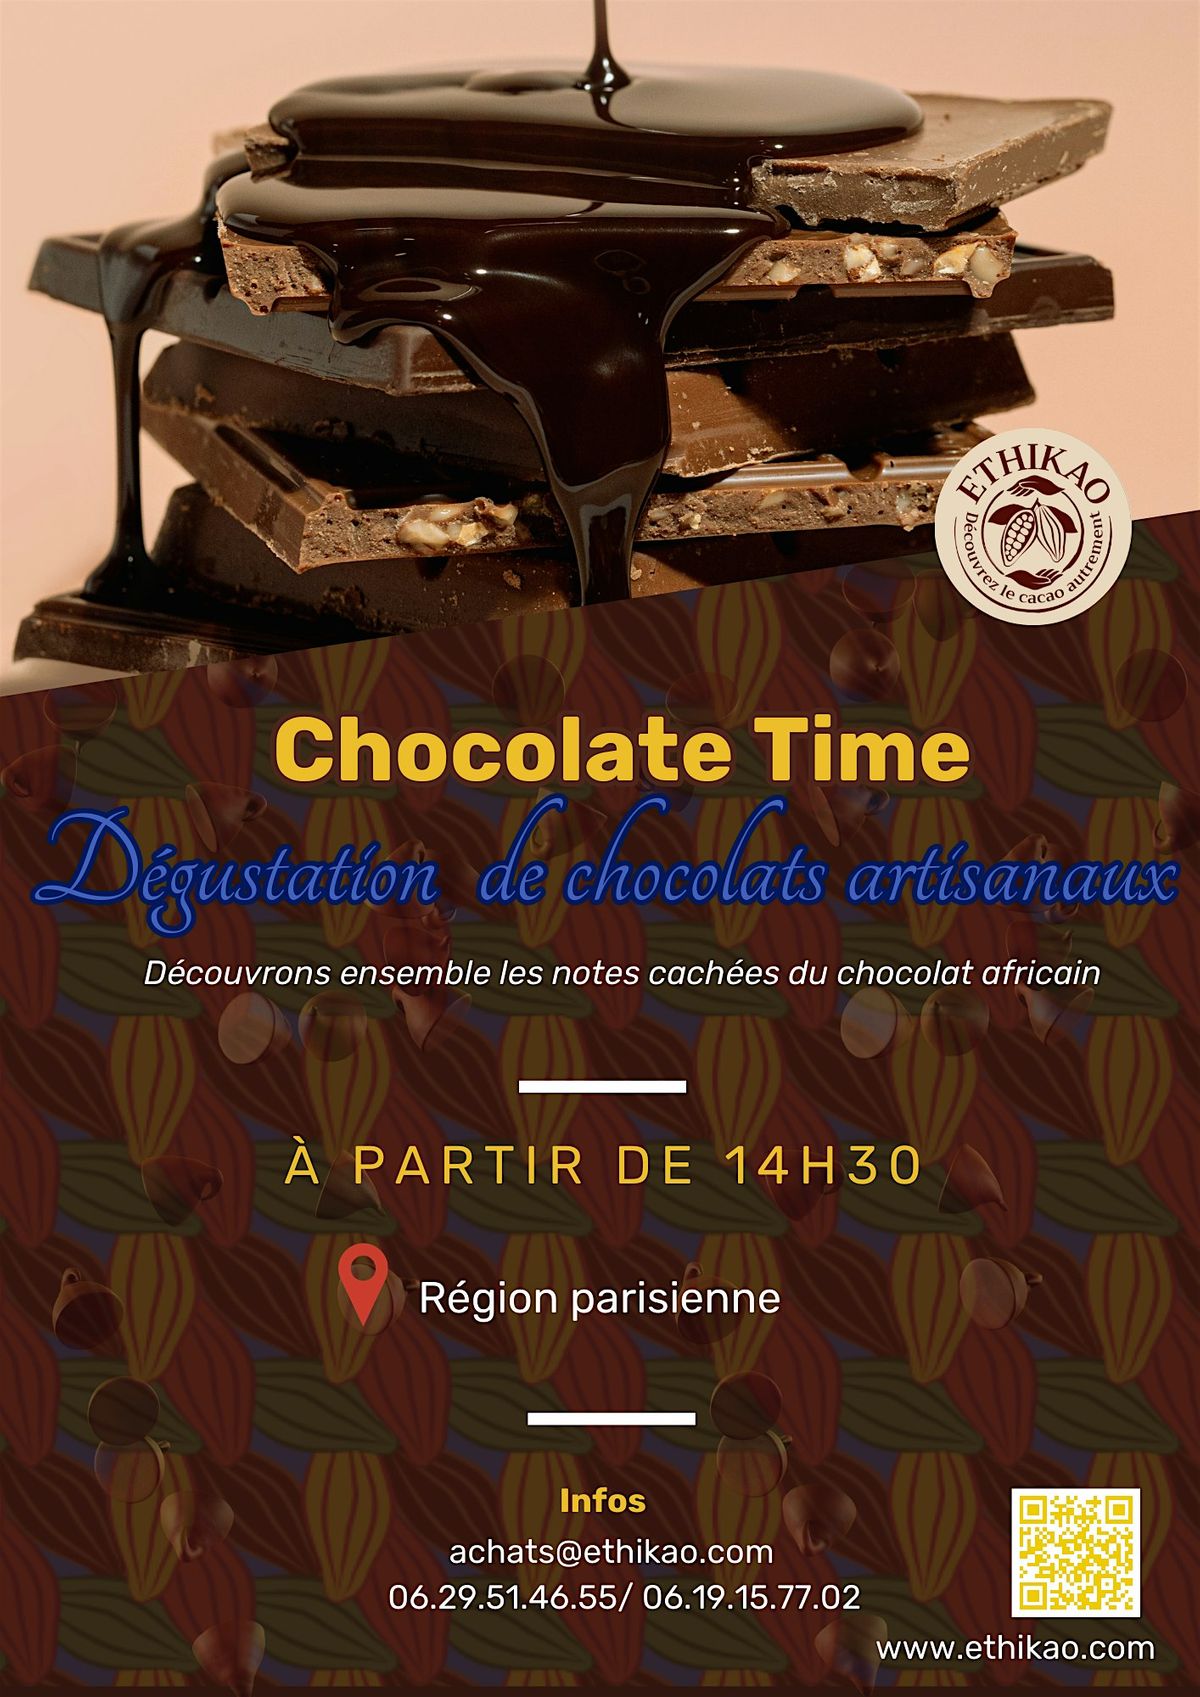 Chocolate Time